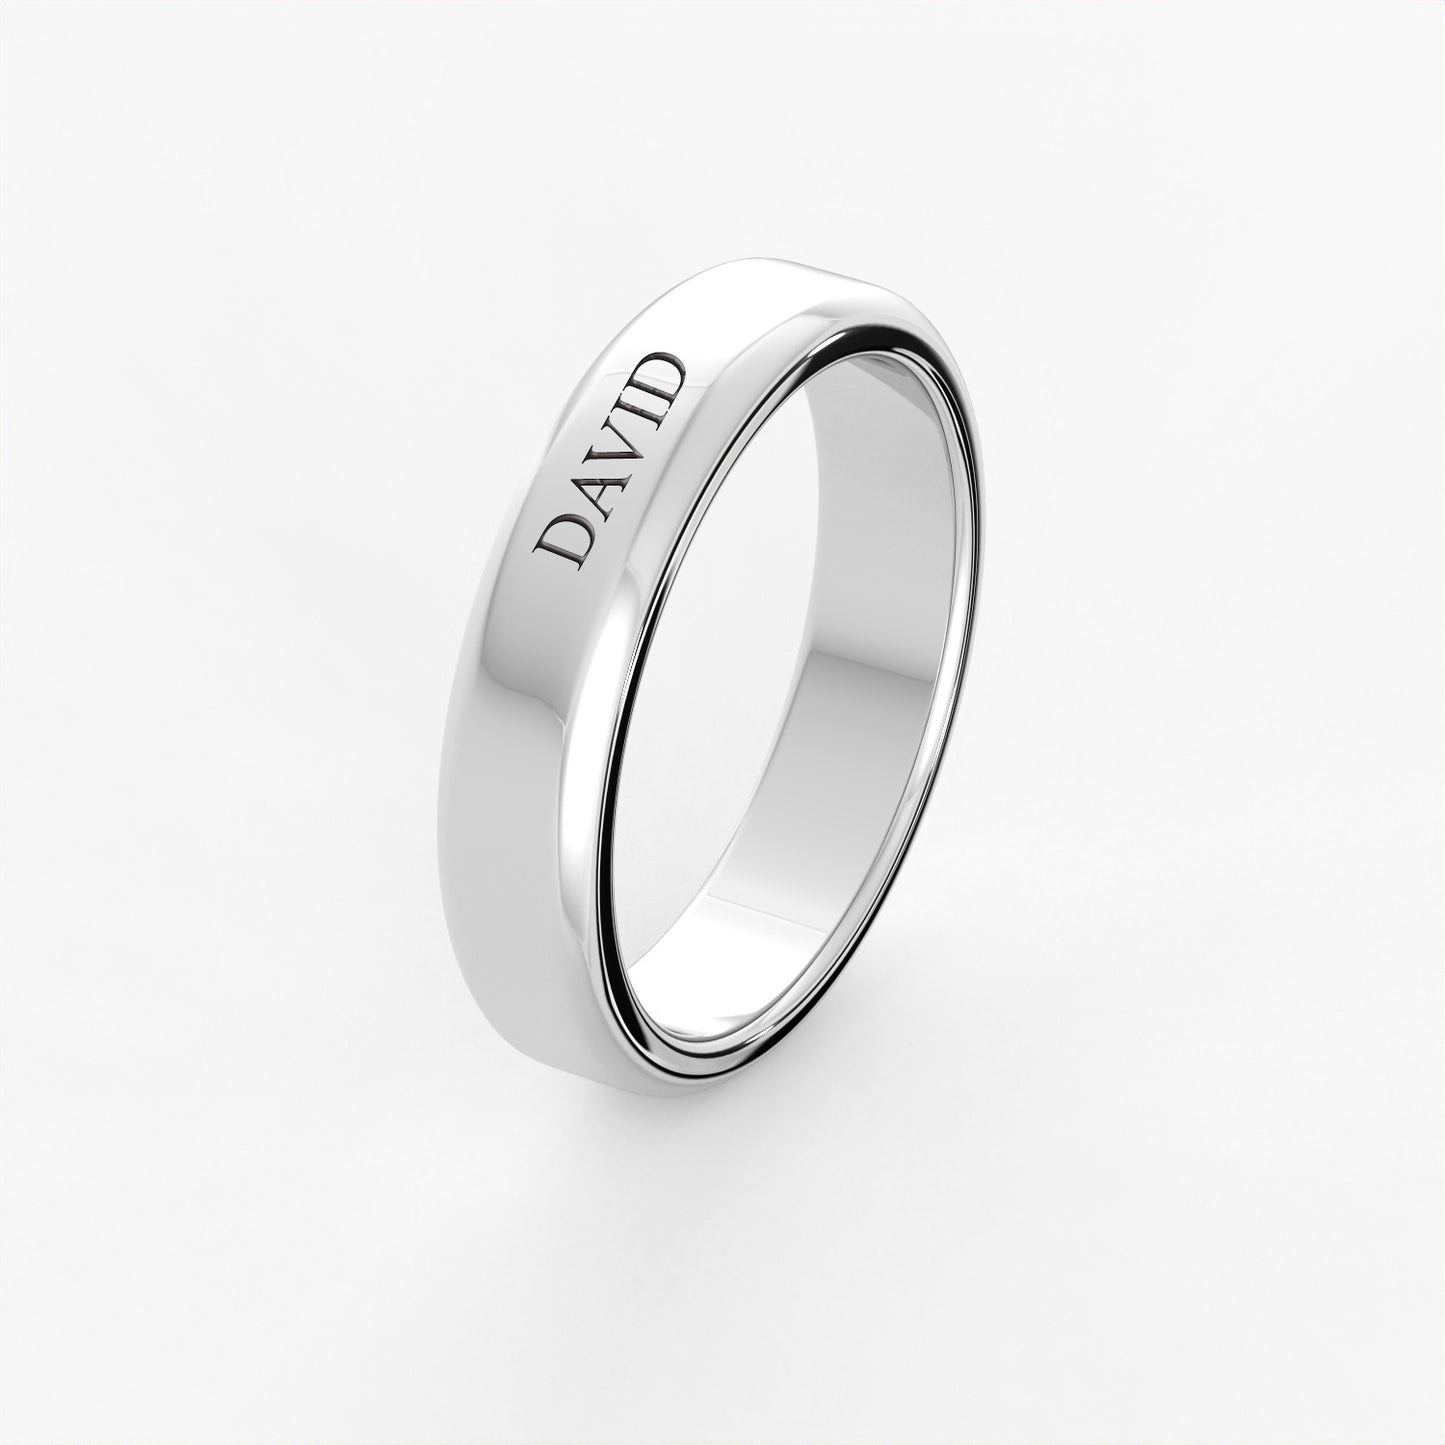 Irosk Inscribe Elegance Ring